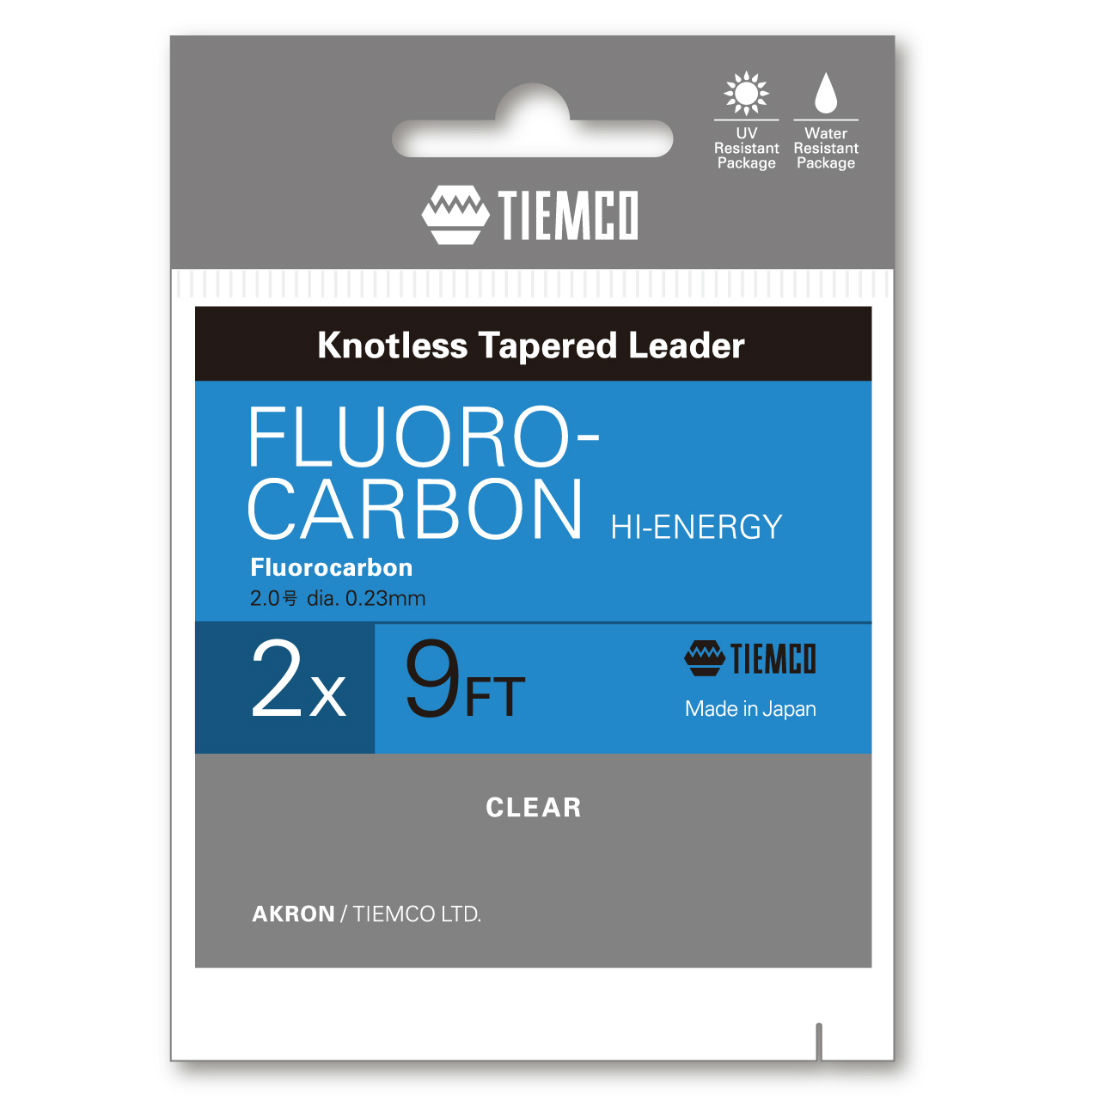 INAINTAS FLY TIEMCO FLUOROCARBON HI-ENERGY LEADER 9ft 4X